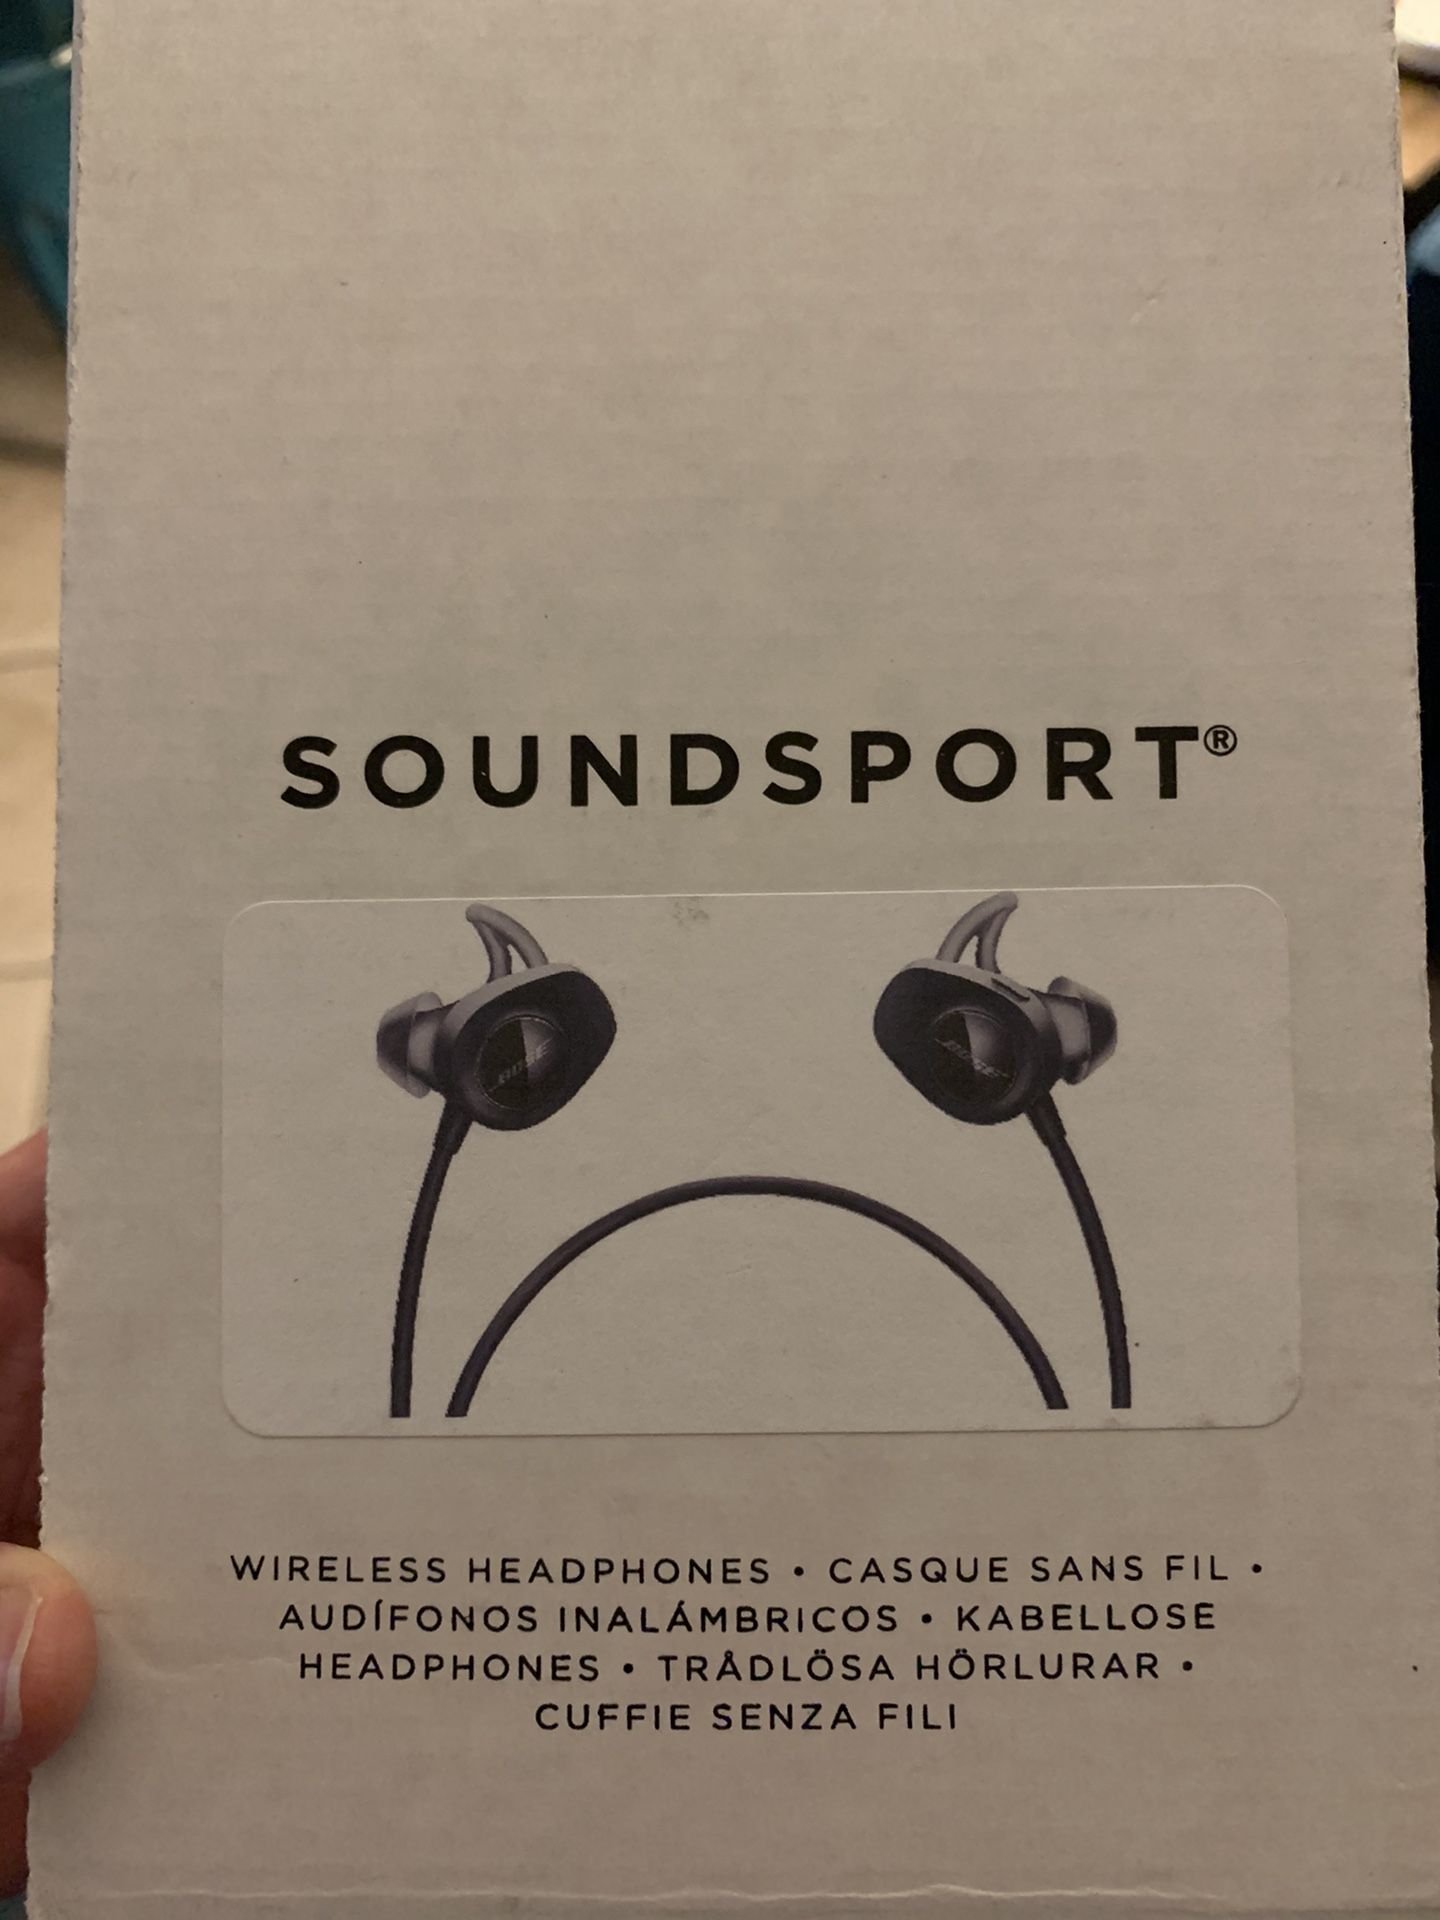 BOSE soundsport wireless headphones